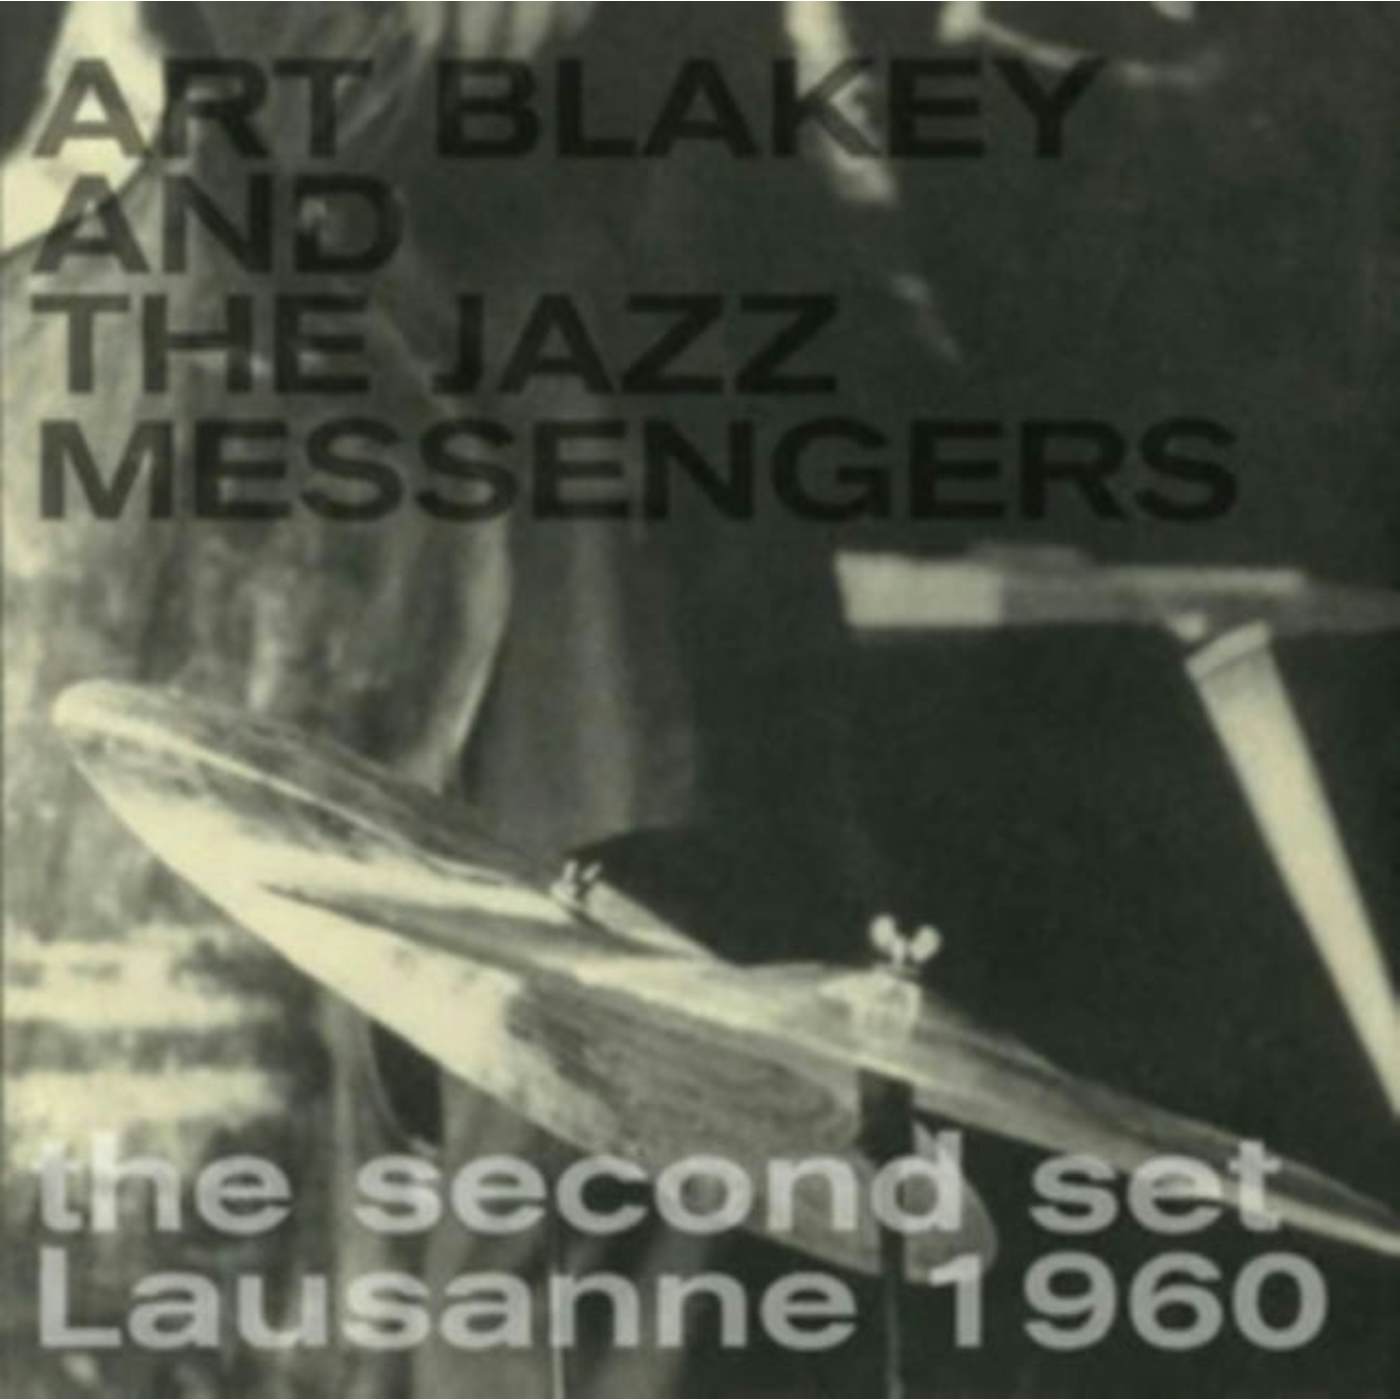 Art Blakey & The Jazz Messengers LP Vinyl Record - Second Set Lausanne 19 60